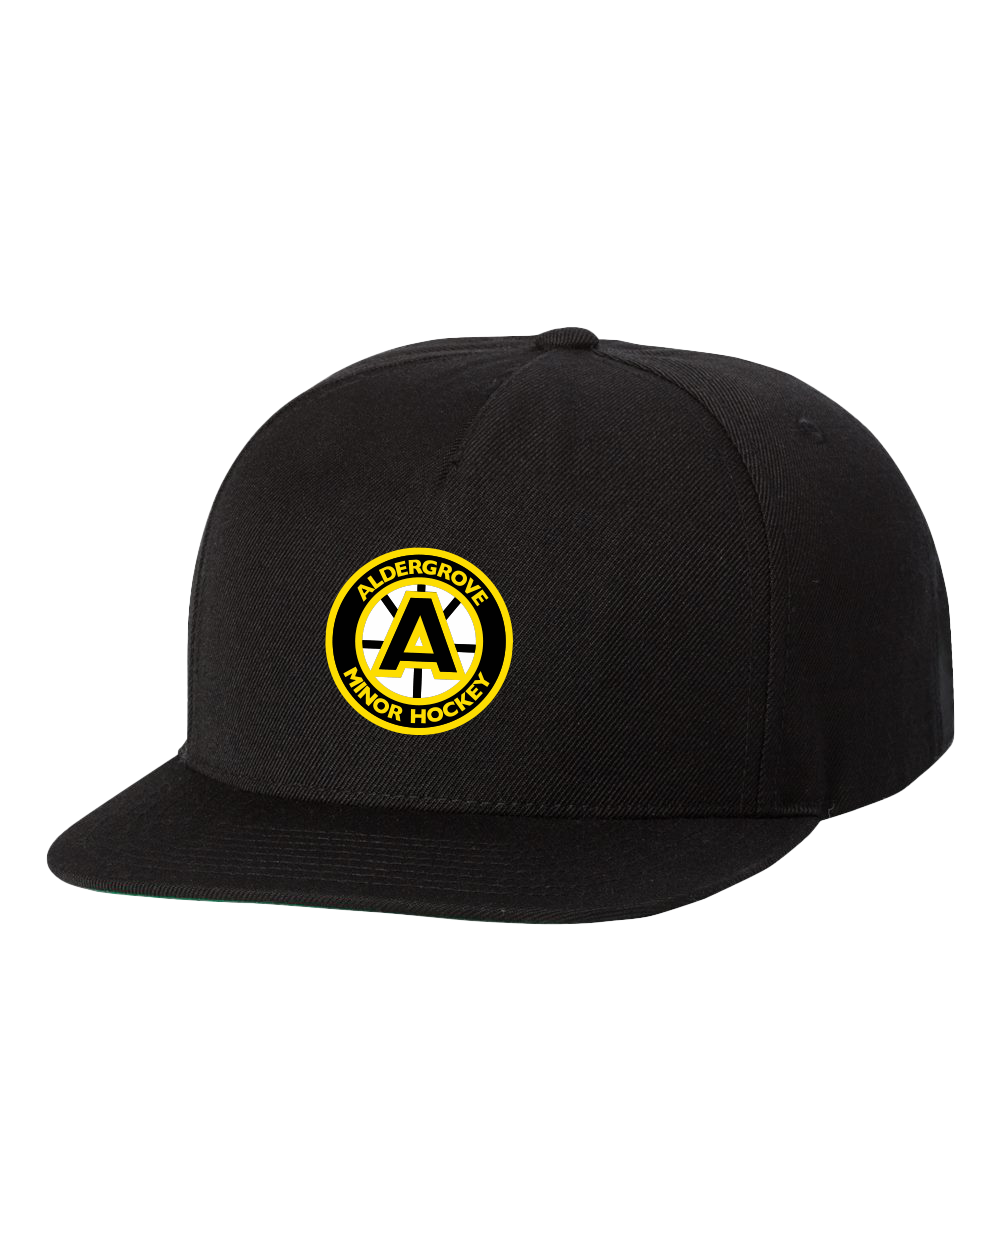 Aldergrove Bruins -- Flat Brim Snapback Hat